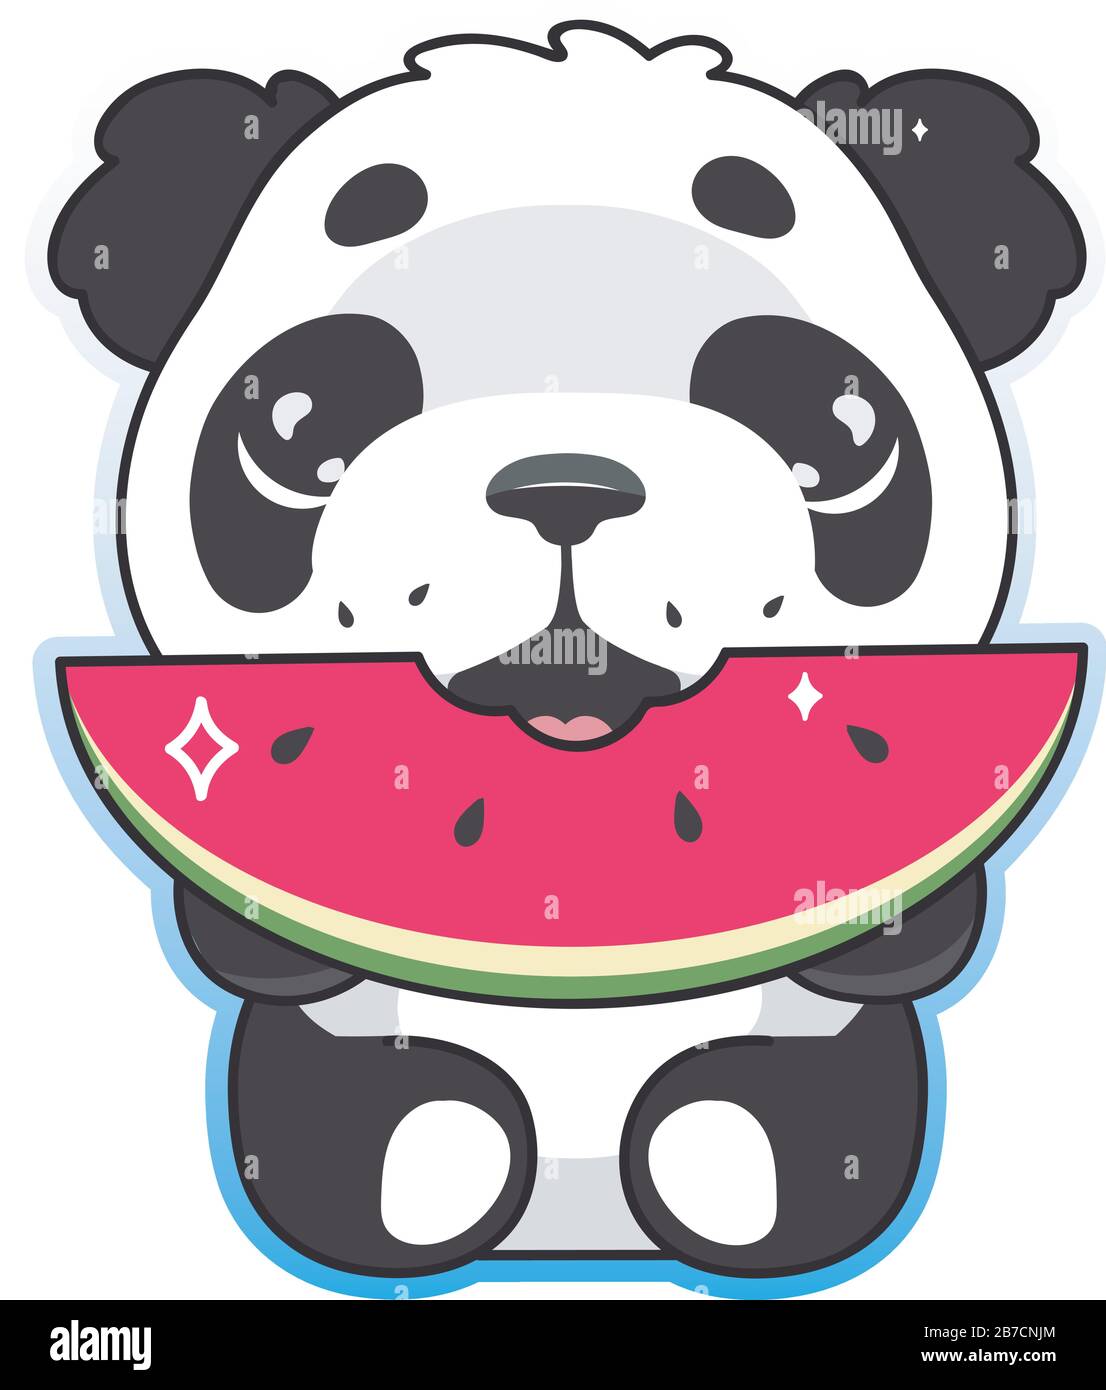 Lovely kawai panda bear. Digital design of a lovely cute kawaii panda bear  over a pastel pink background. Stock Illustration